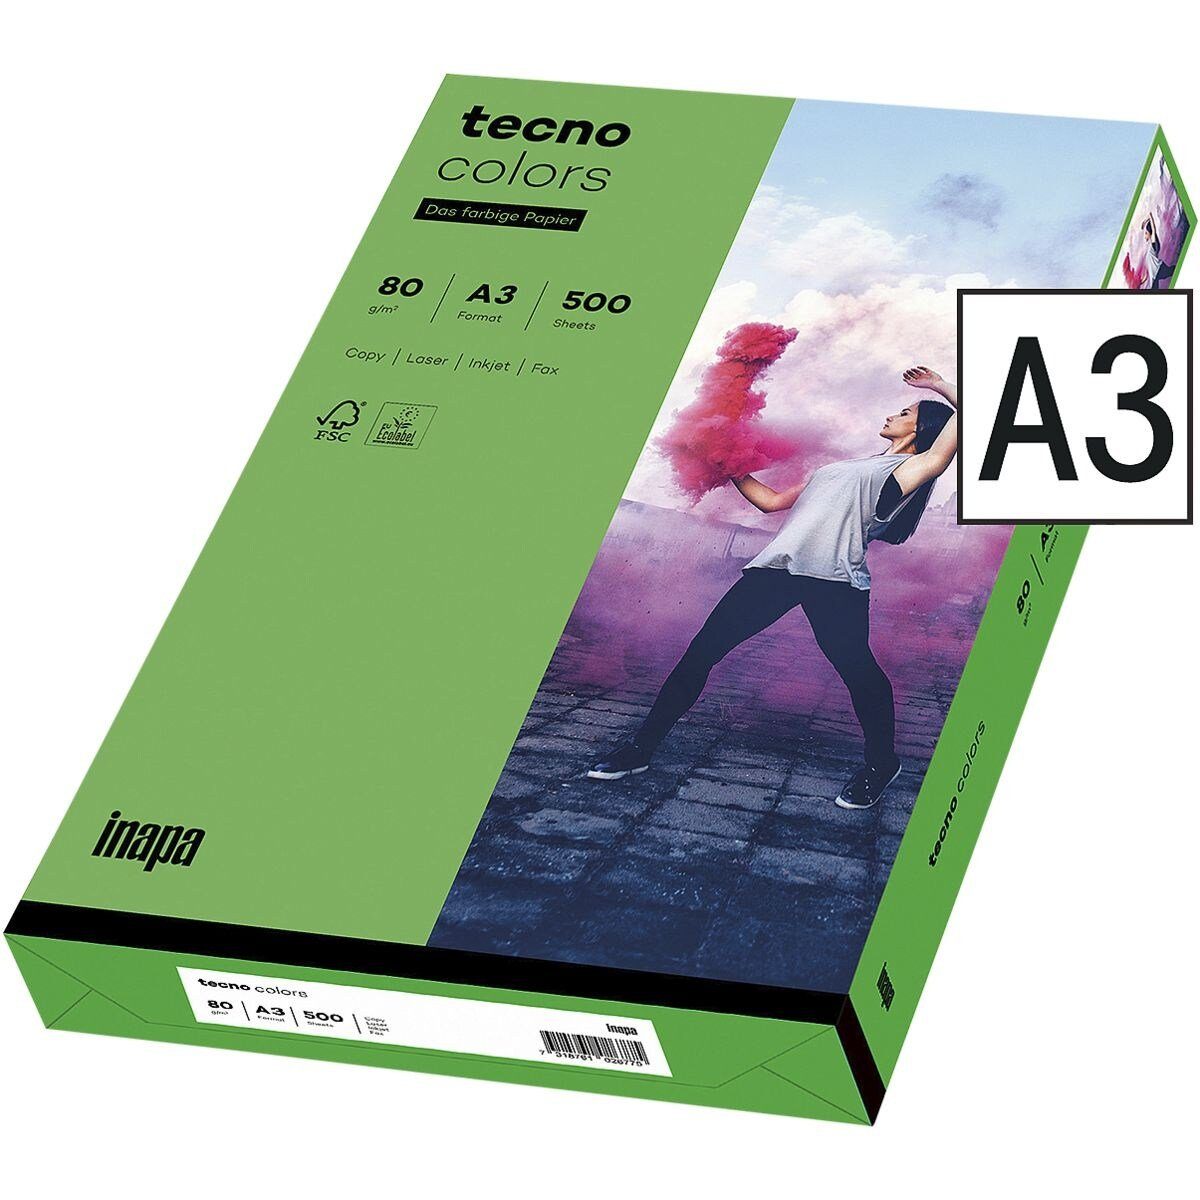 Inapa tecno Drucker- und Kopierpapier Rainbow / tecno Colors, Intensivfarben, Format DIN A3, 80 g/m², 500 Blatt intensivgrün